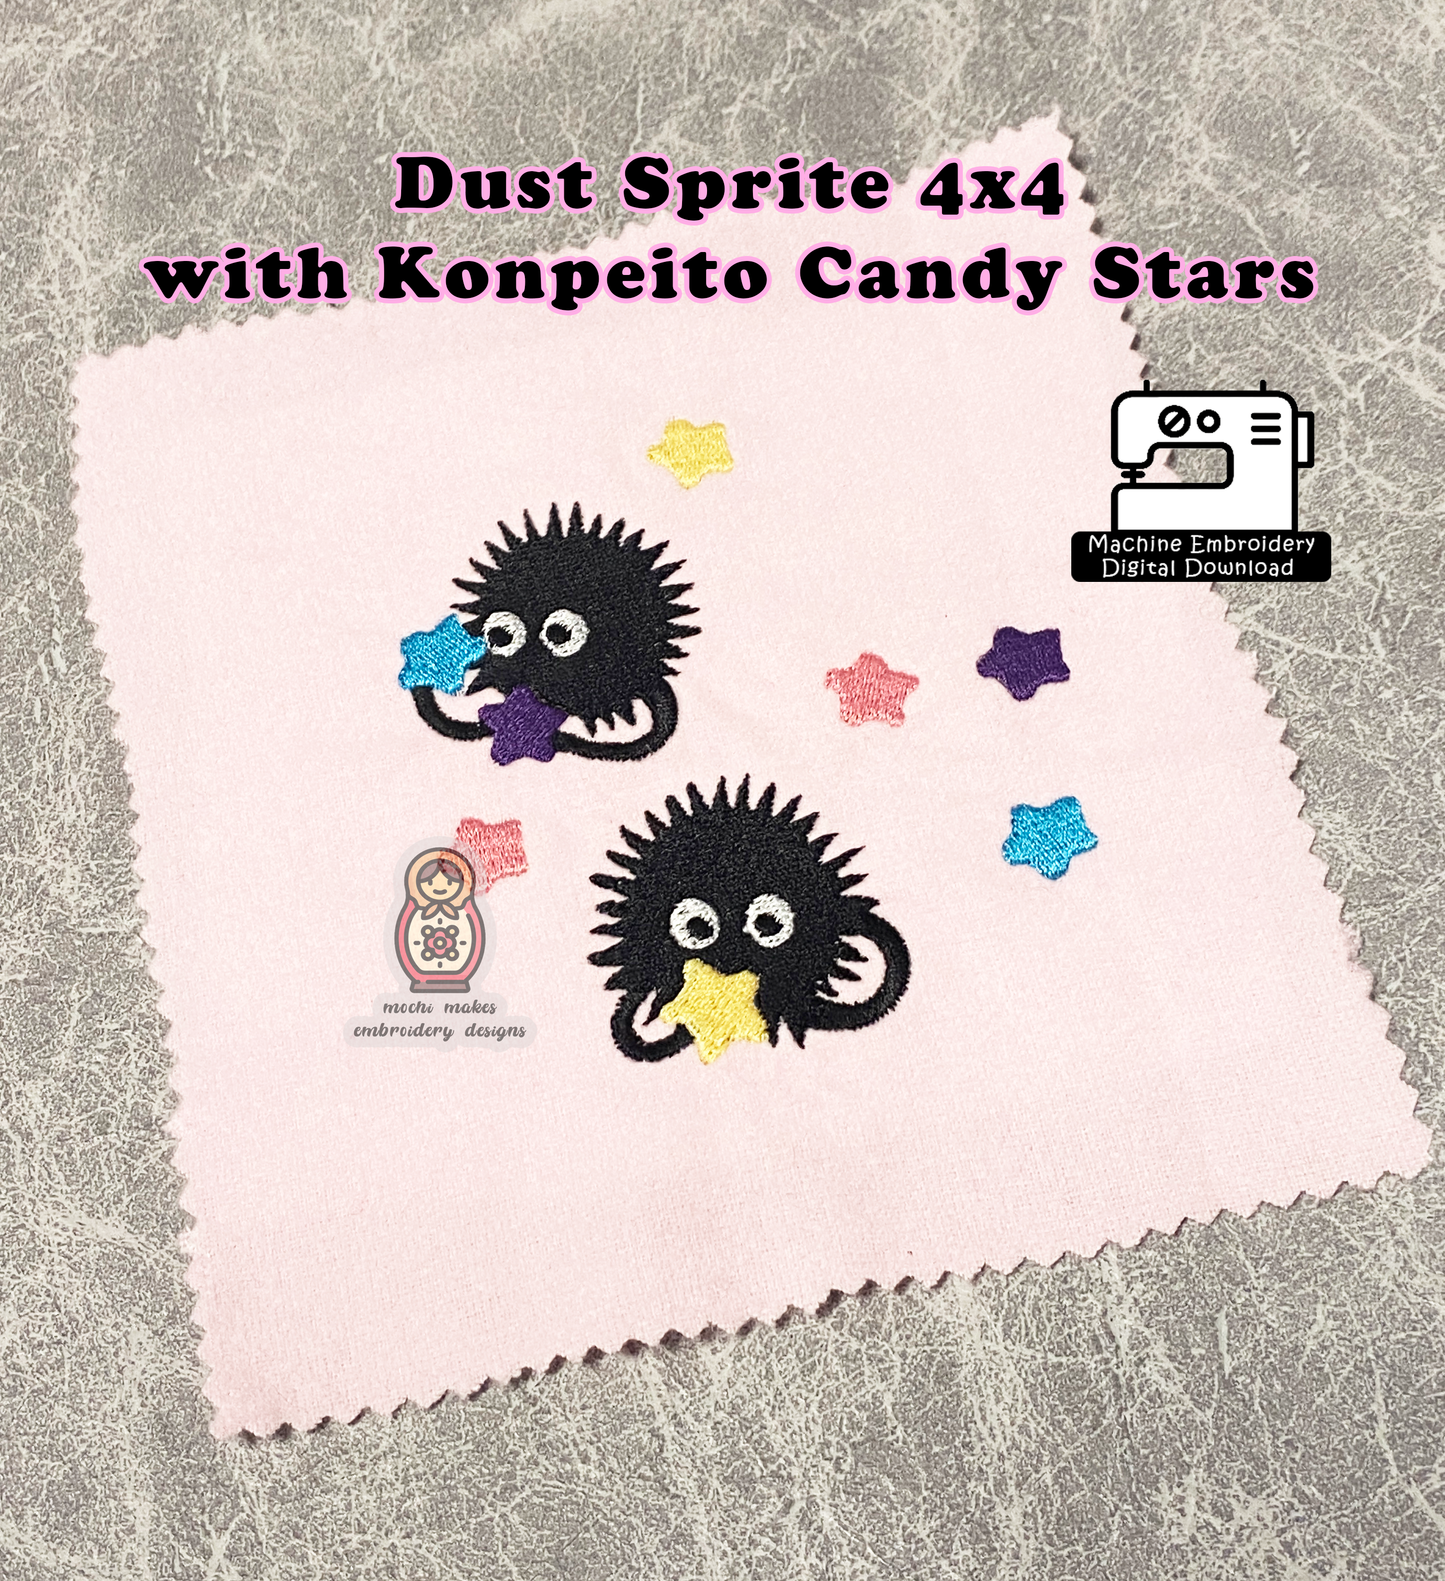 Konpeito Star Candy Dust Sprite Anime Japanese Japan Kawaii 4x4 Machine Embroidery Pattern Digital Download Design Cosplay Cute Kids Craft